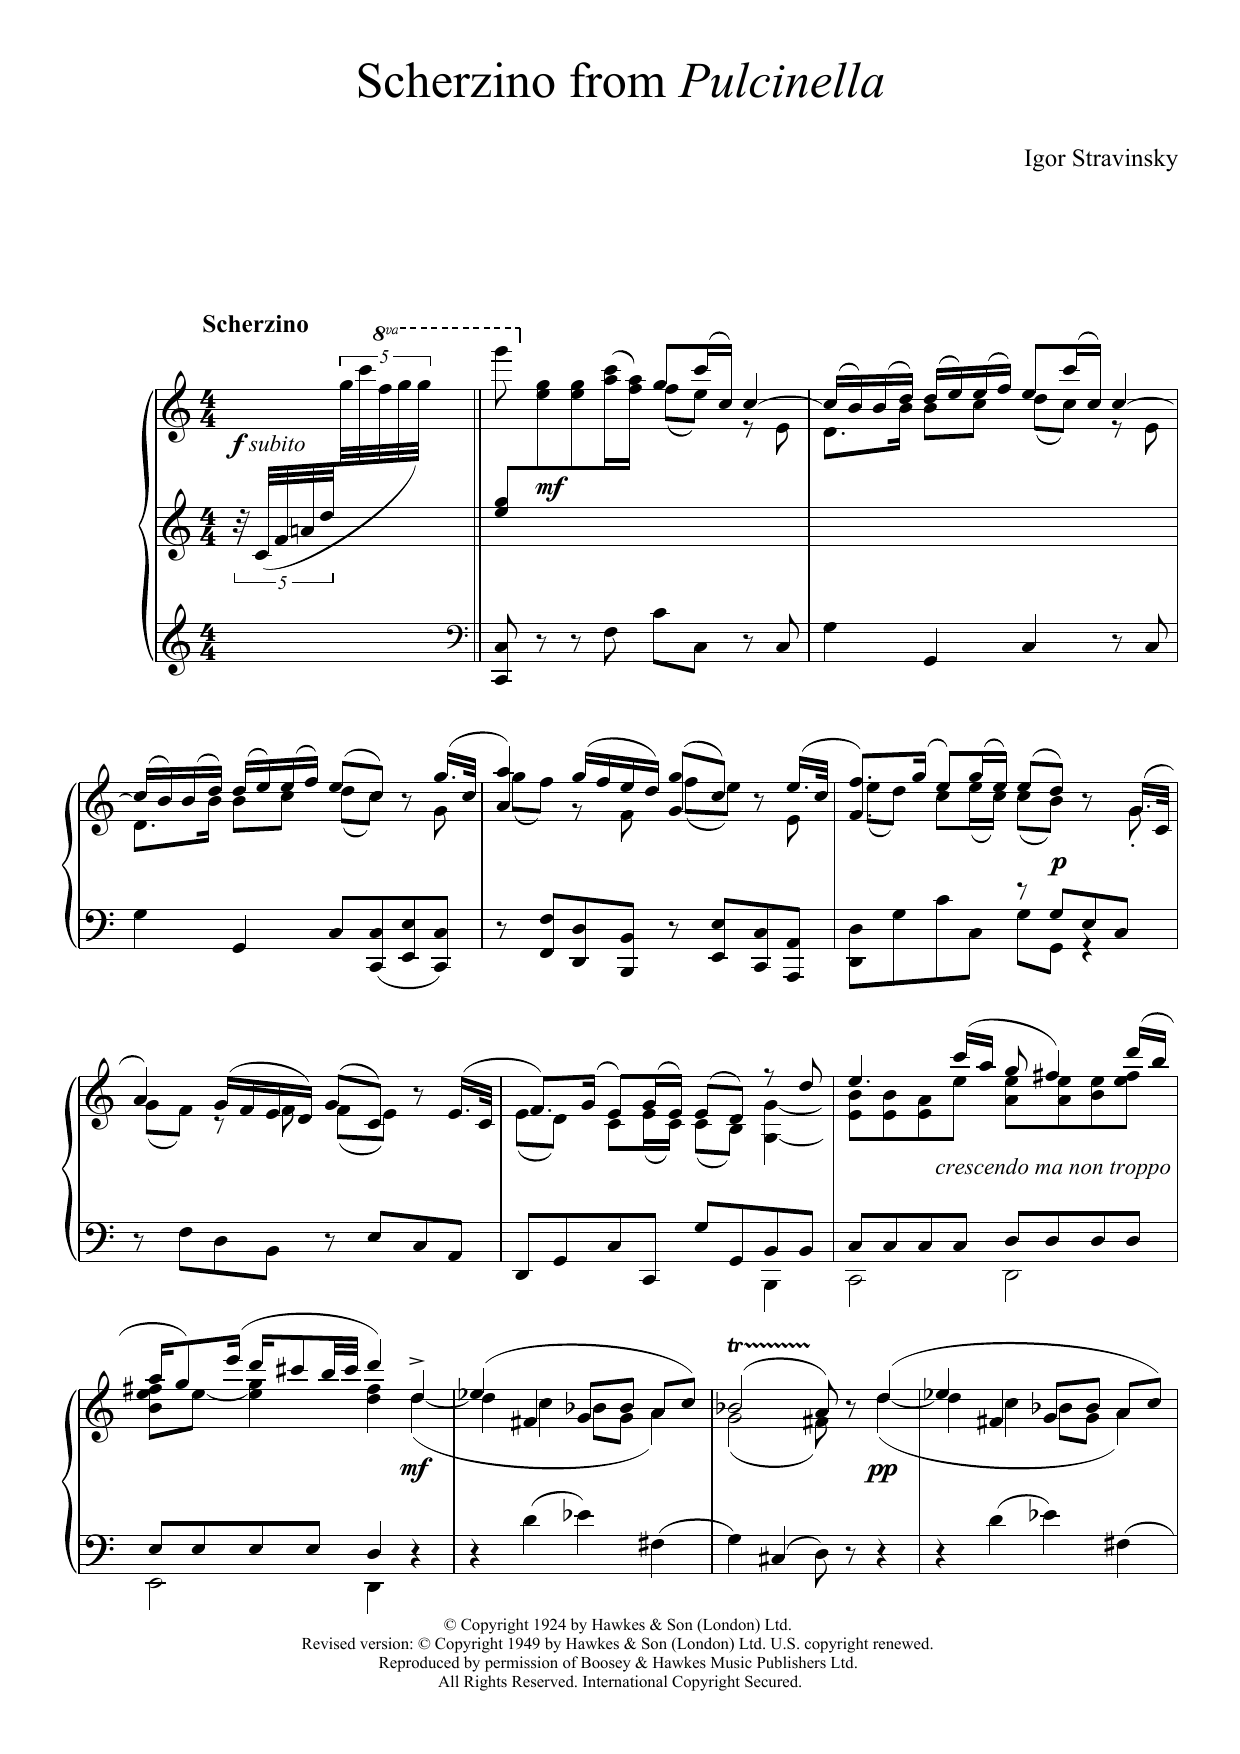 Igor Stravinsky Scherzino from Pulcinella Sheet Music Notes & Chords for Piano - Download or Print PDF